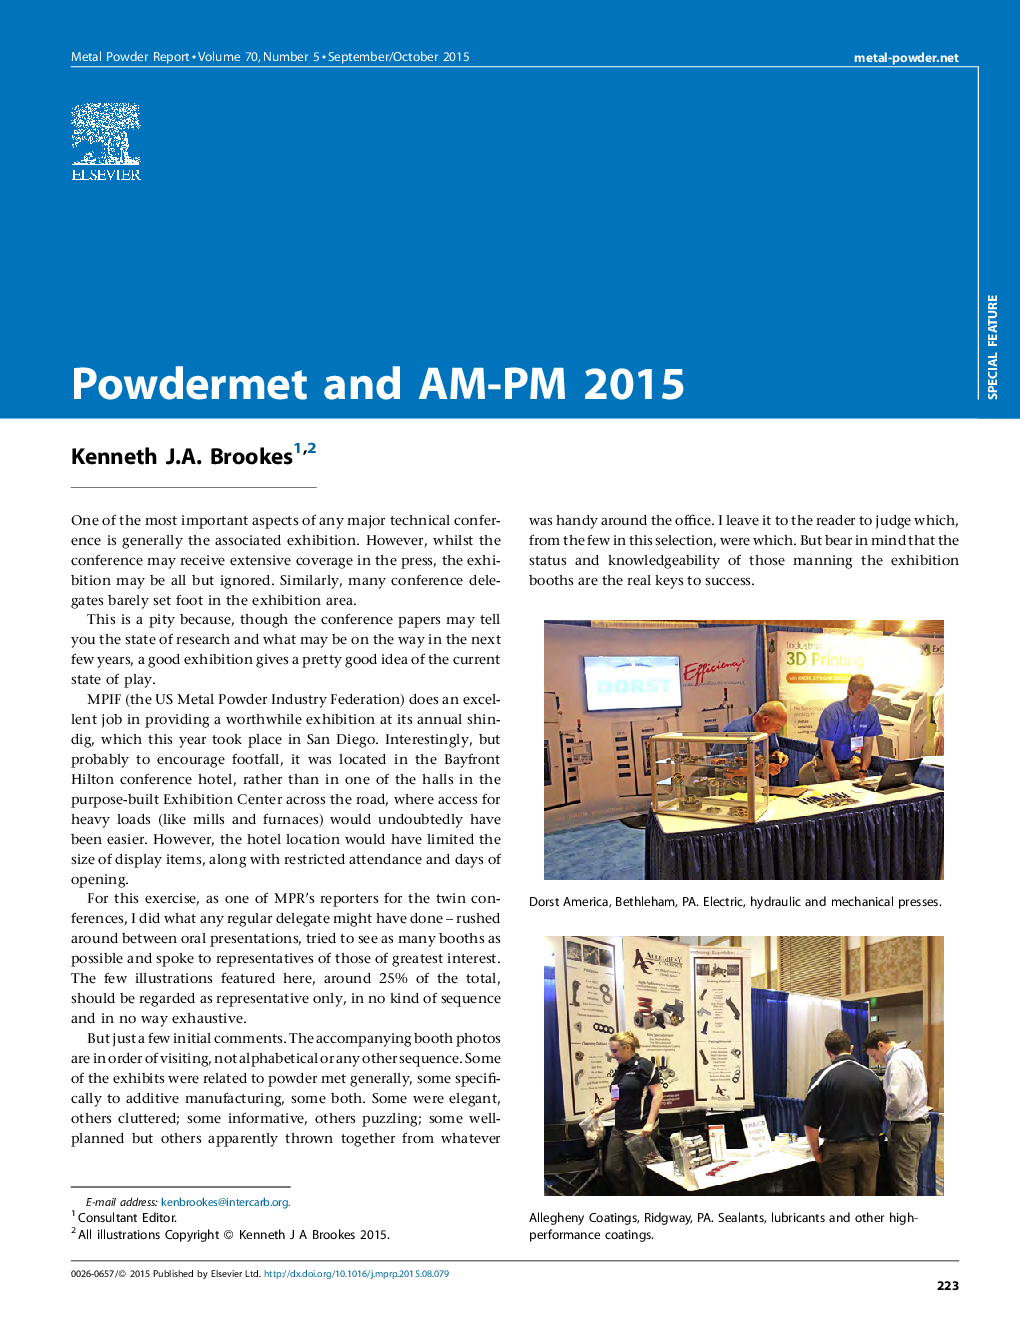 Powdermet and AM-PM 2015